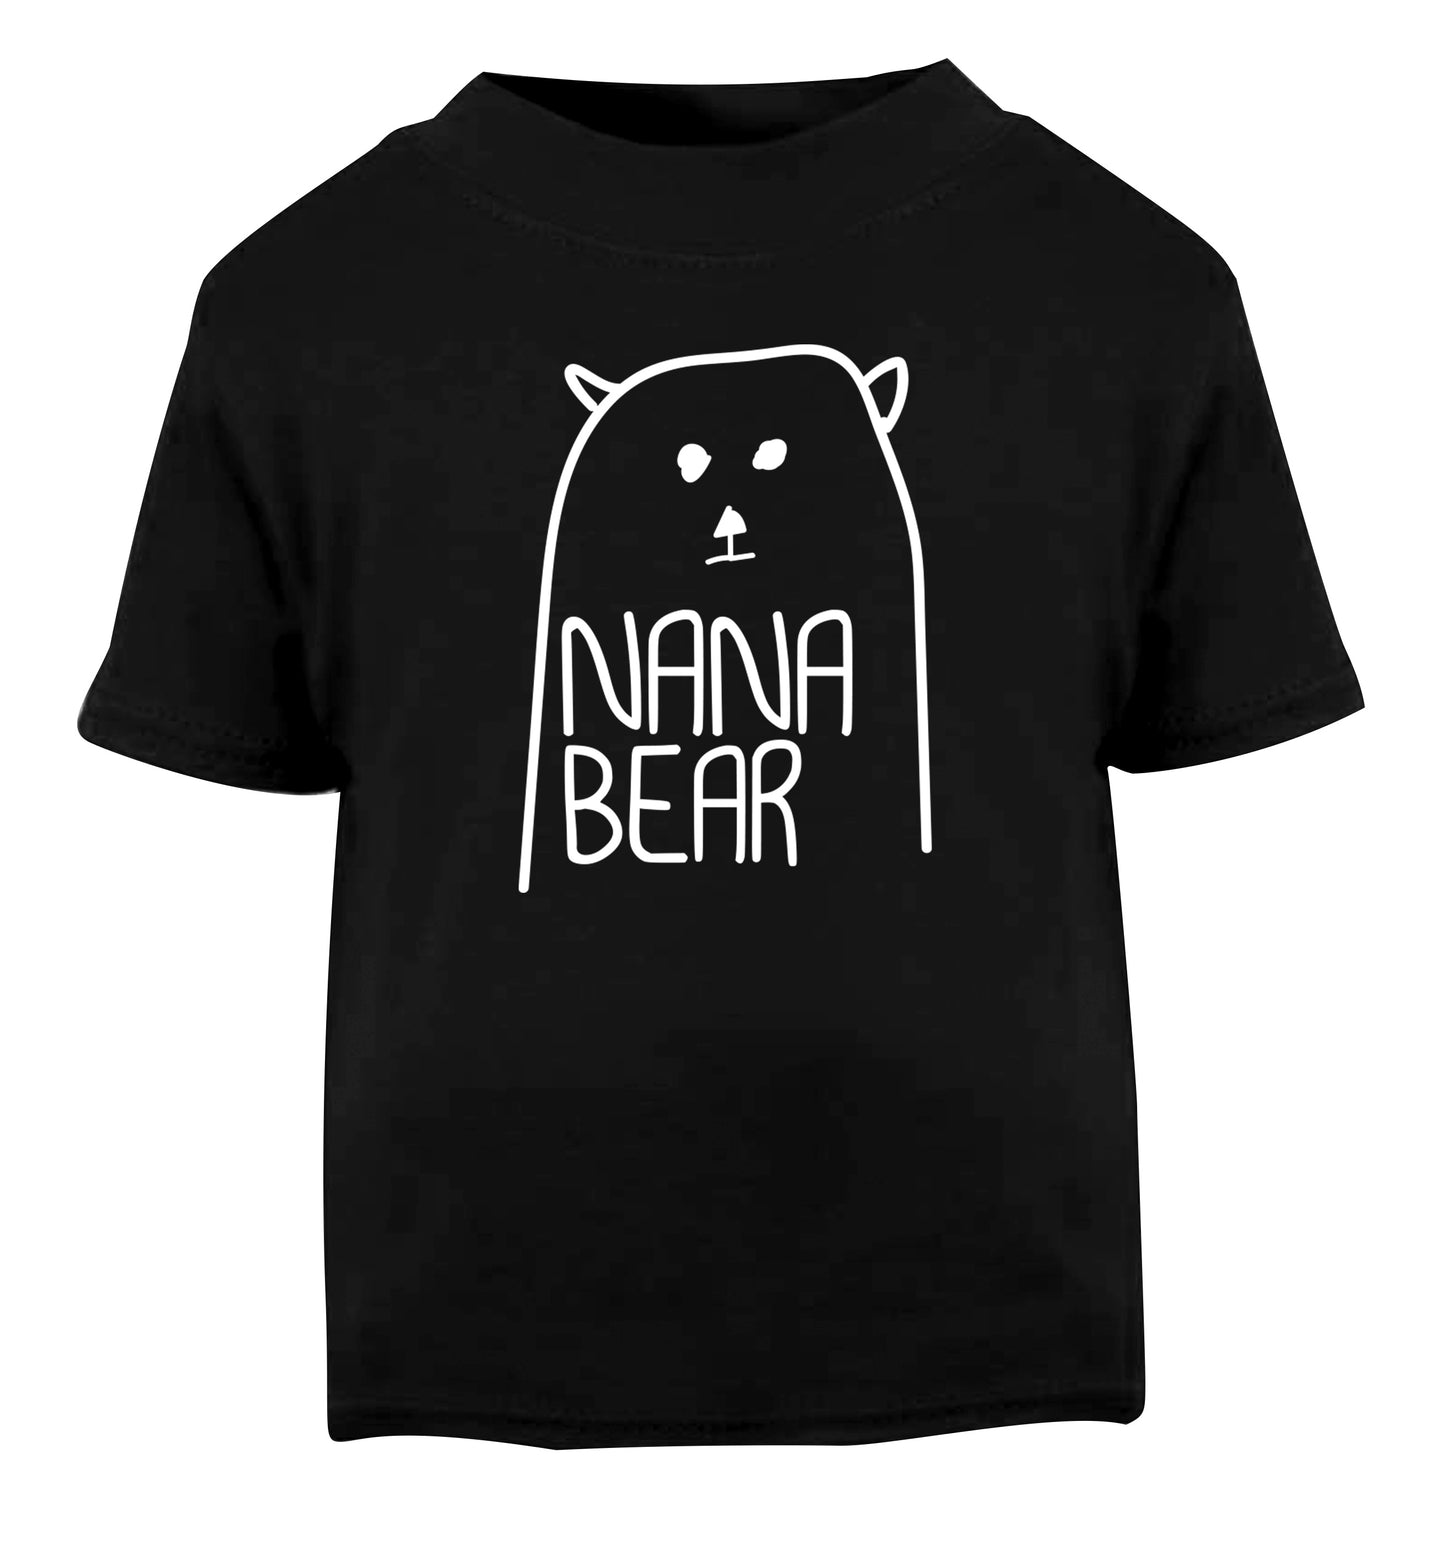 Nana bear Black Baby Toddler Tshirt 2 years